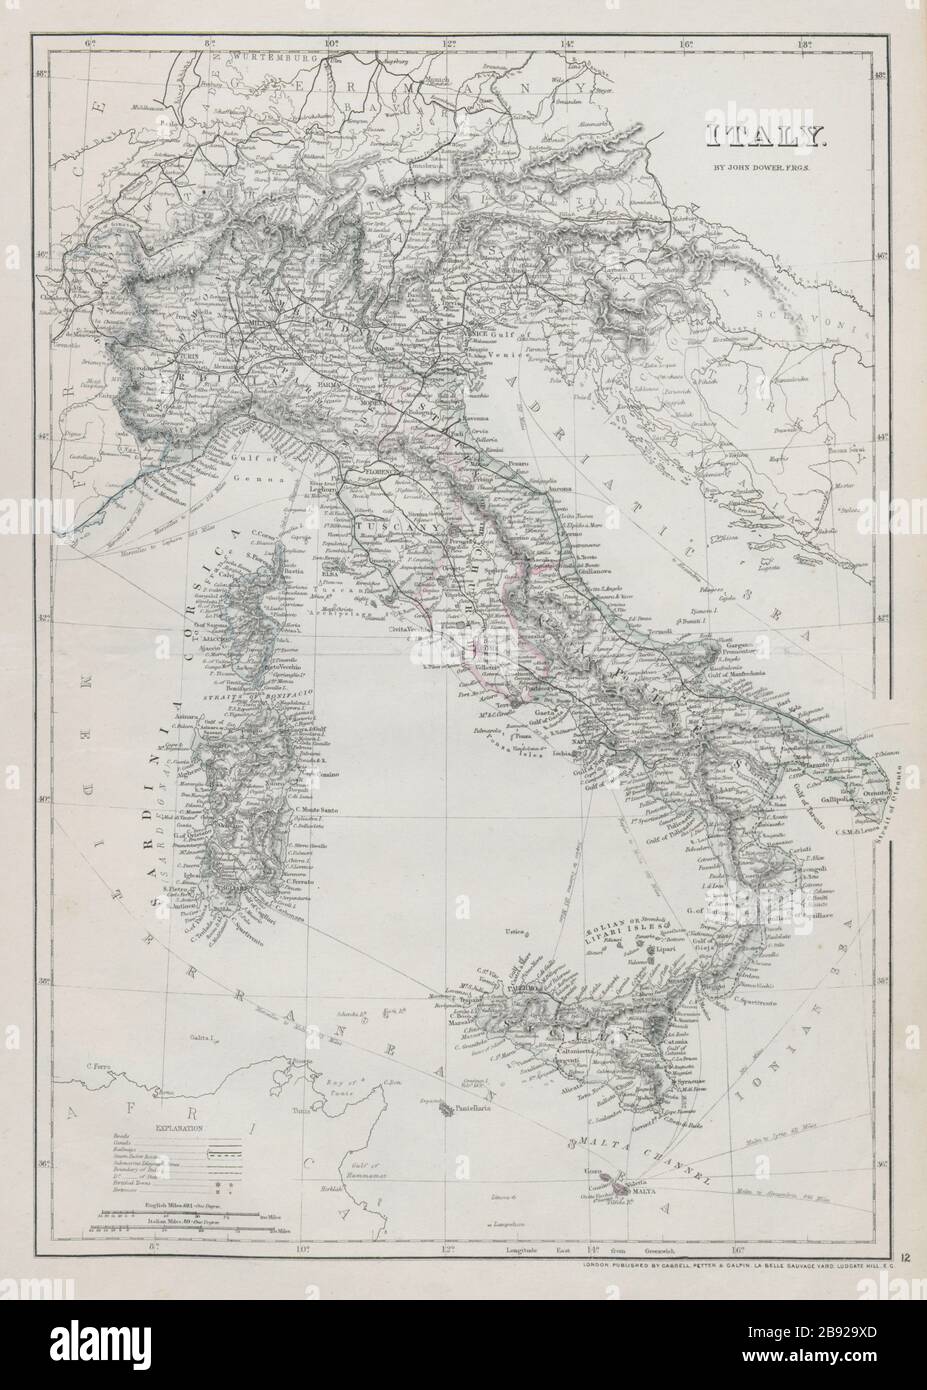 ITALY SWITZERLAND TYROL ALPS. Italian unification.DOWER.Dispatch atlas 1868 map Stock Photo